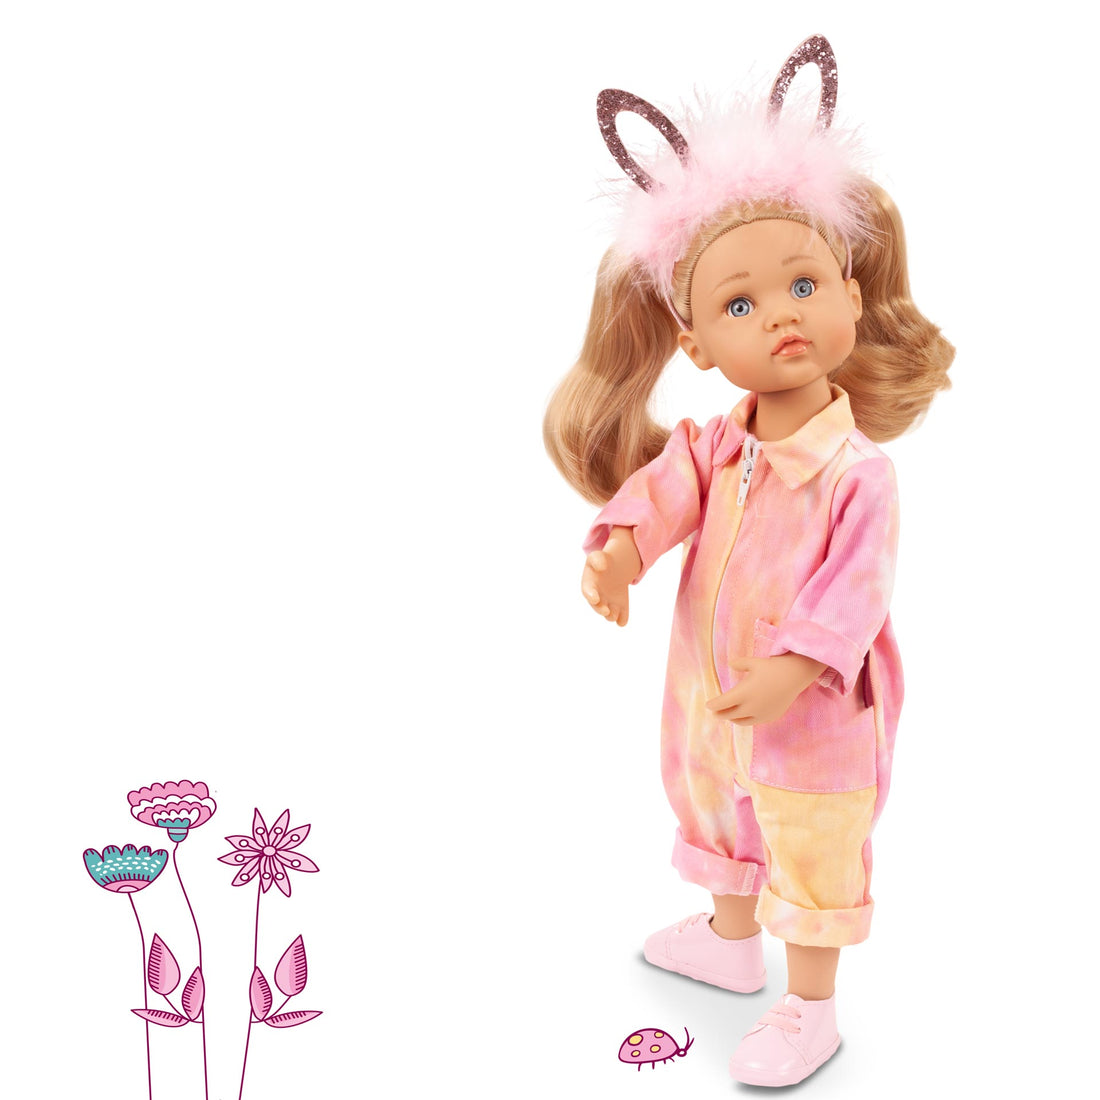 Handcrafted Doll - Little Kidz Götz Girl Springtime